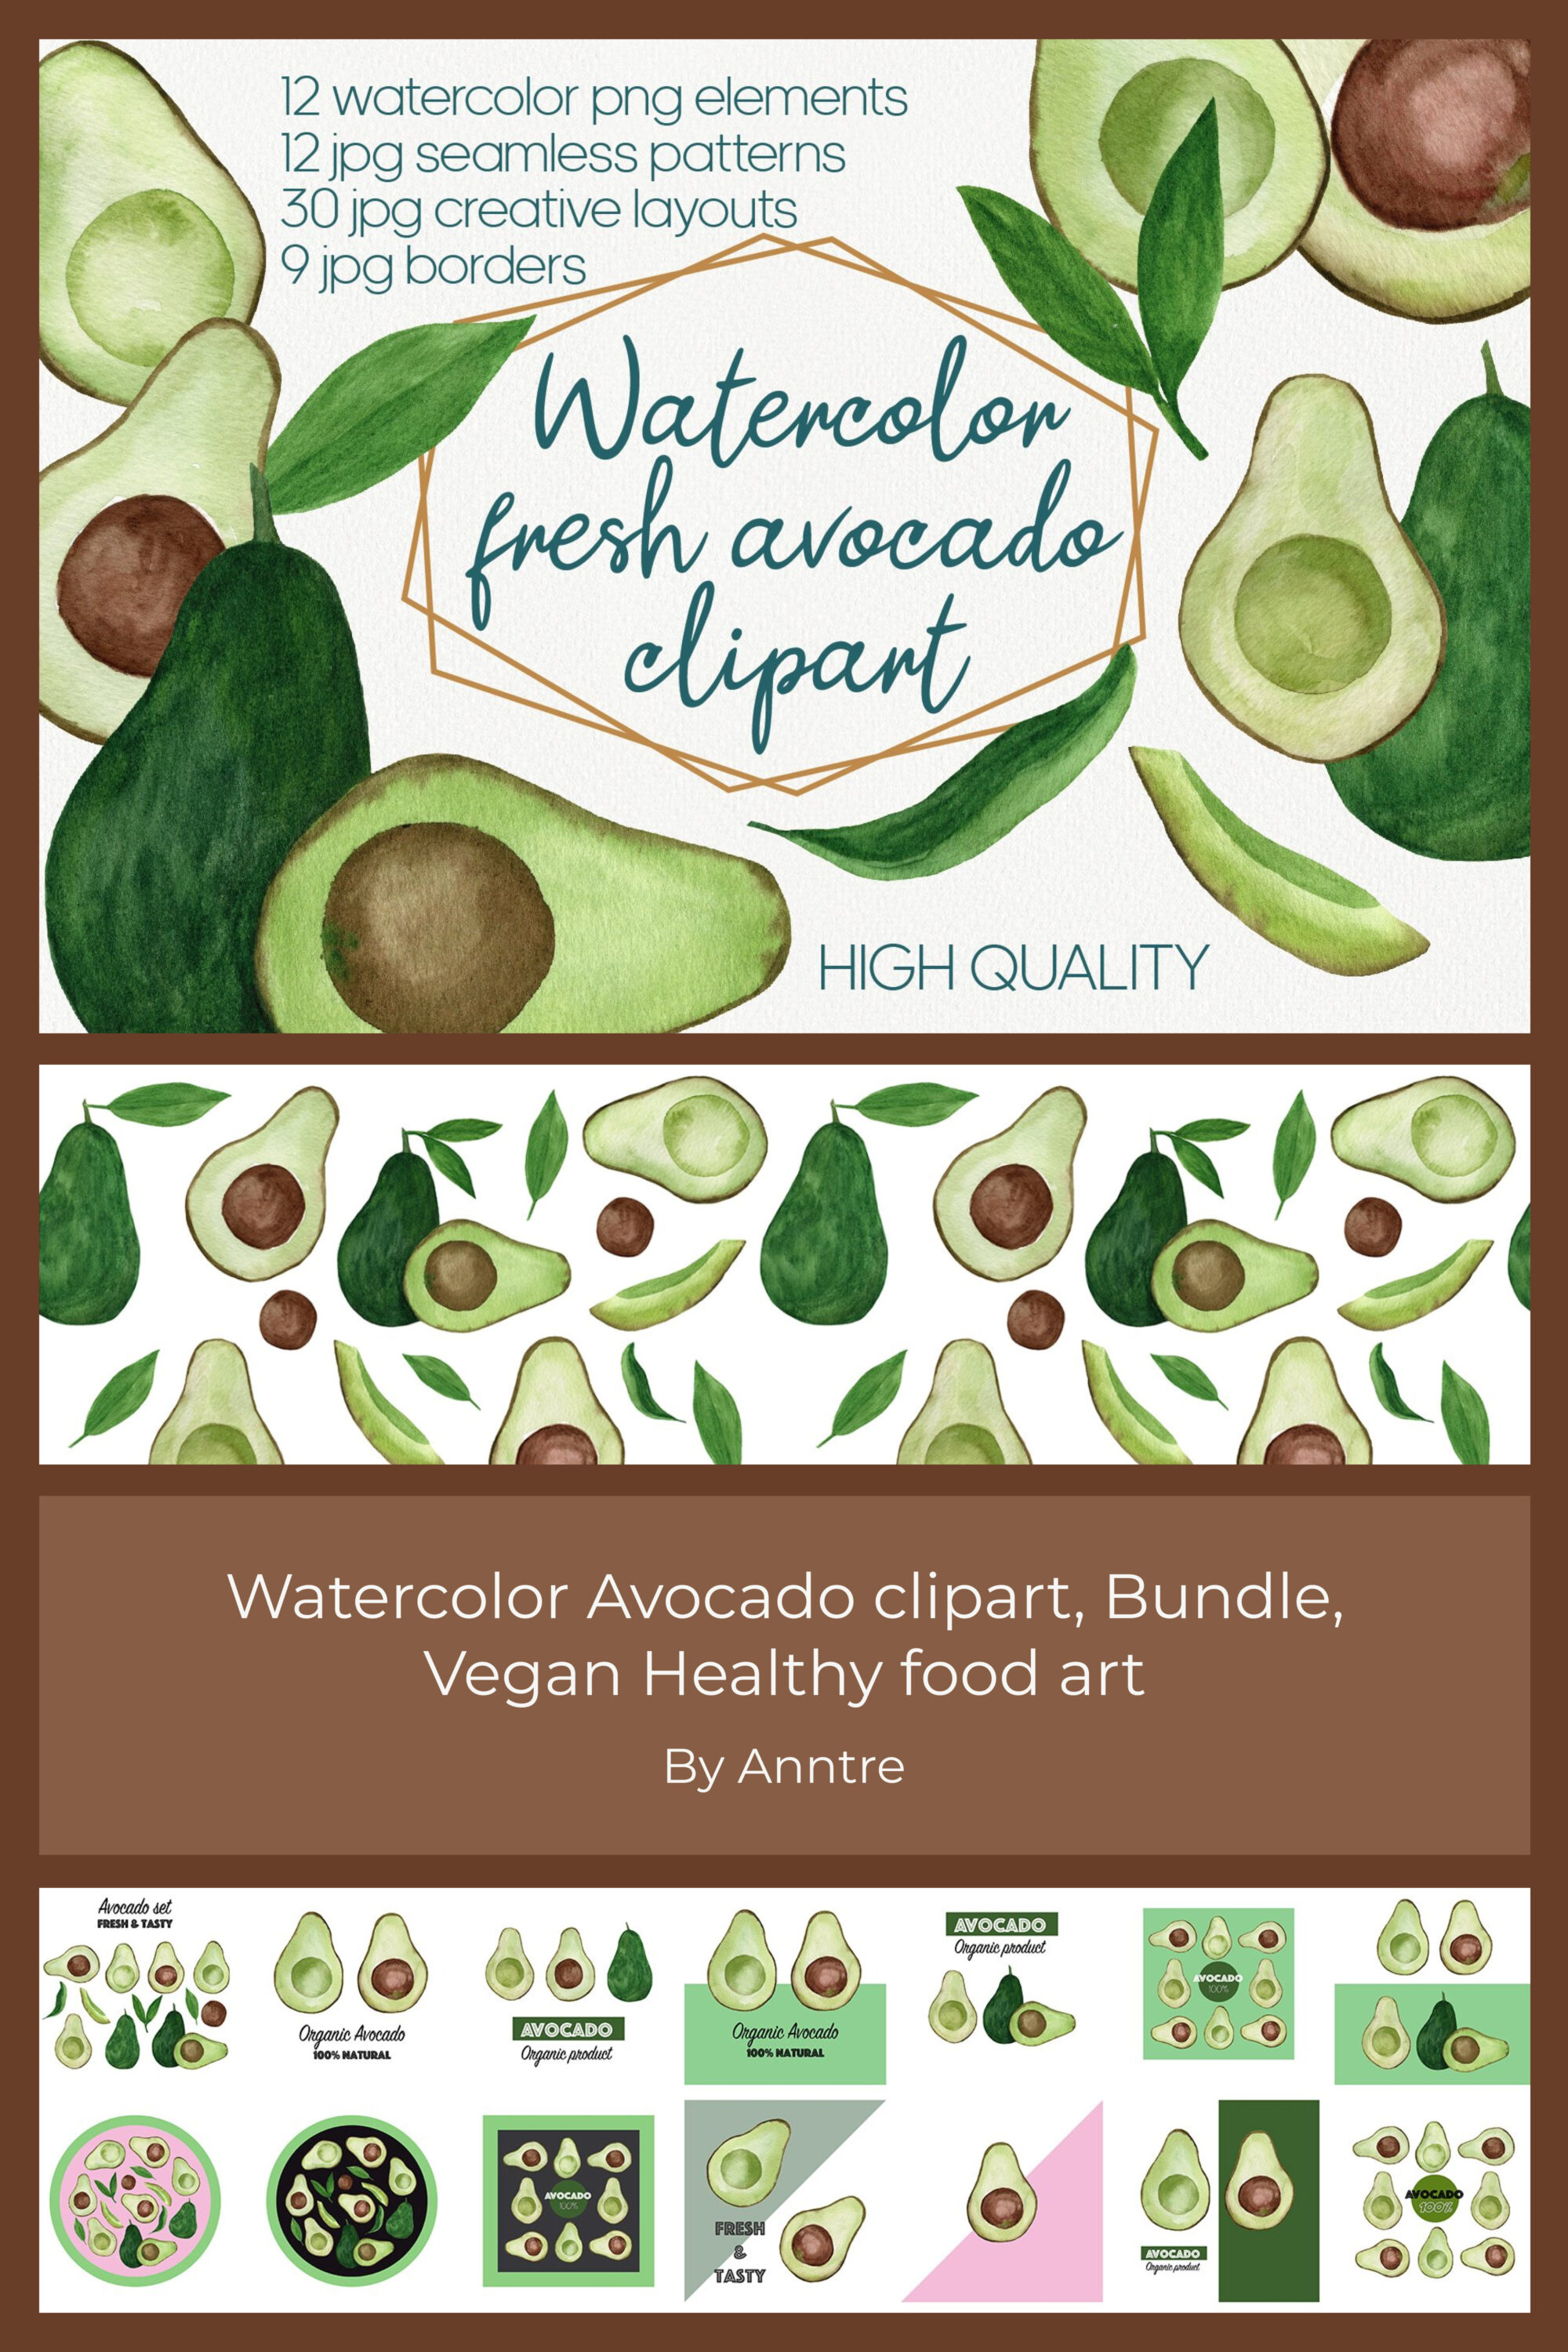 Watercolor avocado clipart bundle vegan healthy food of pinterest.